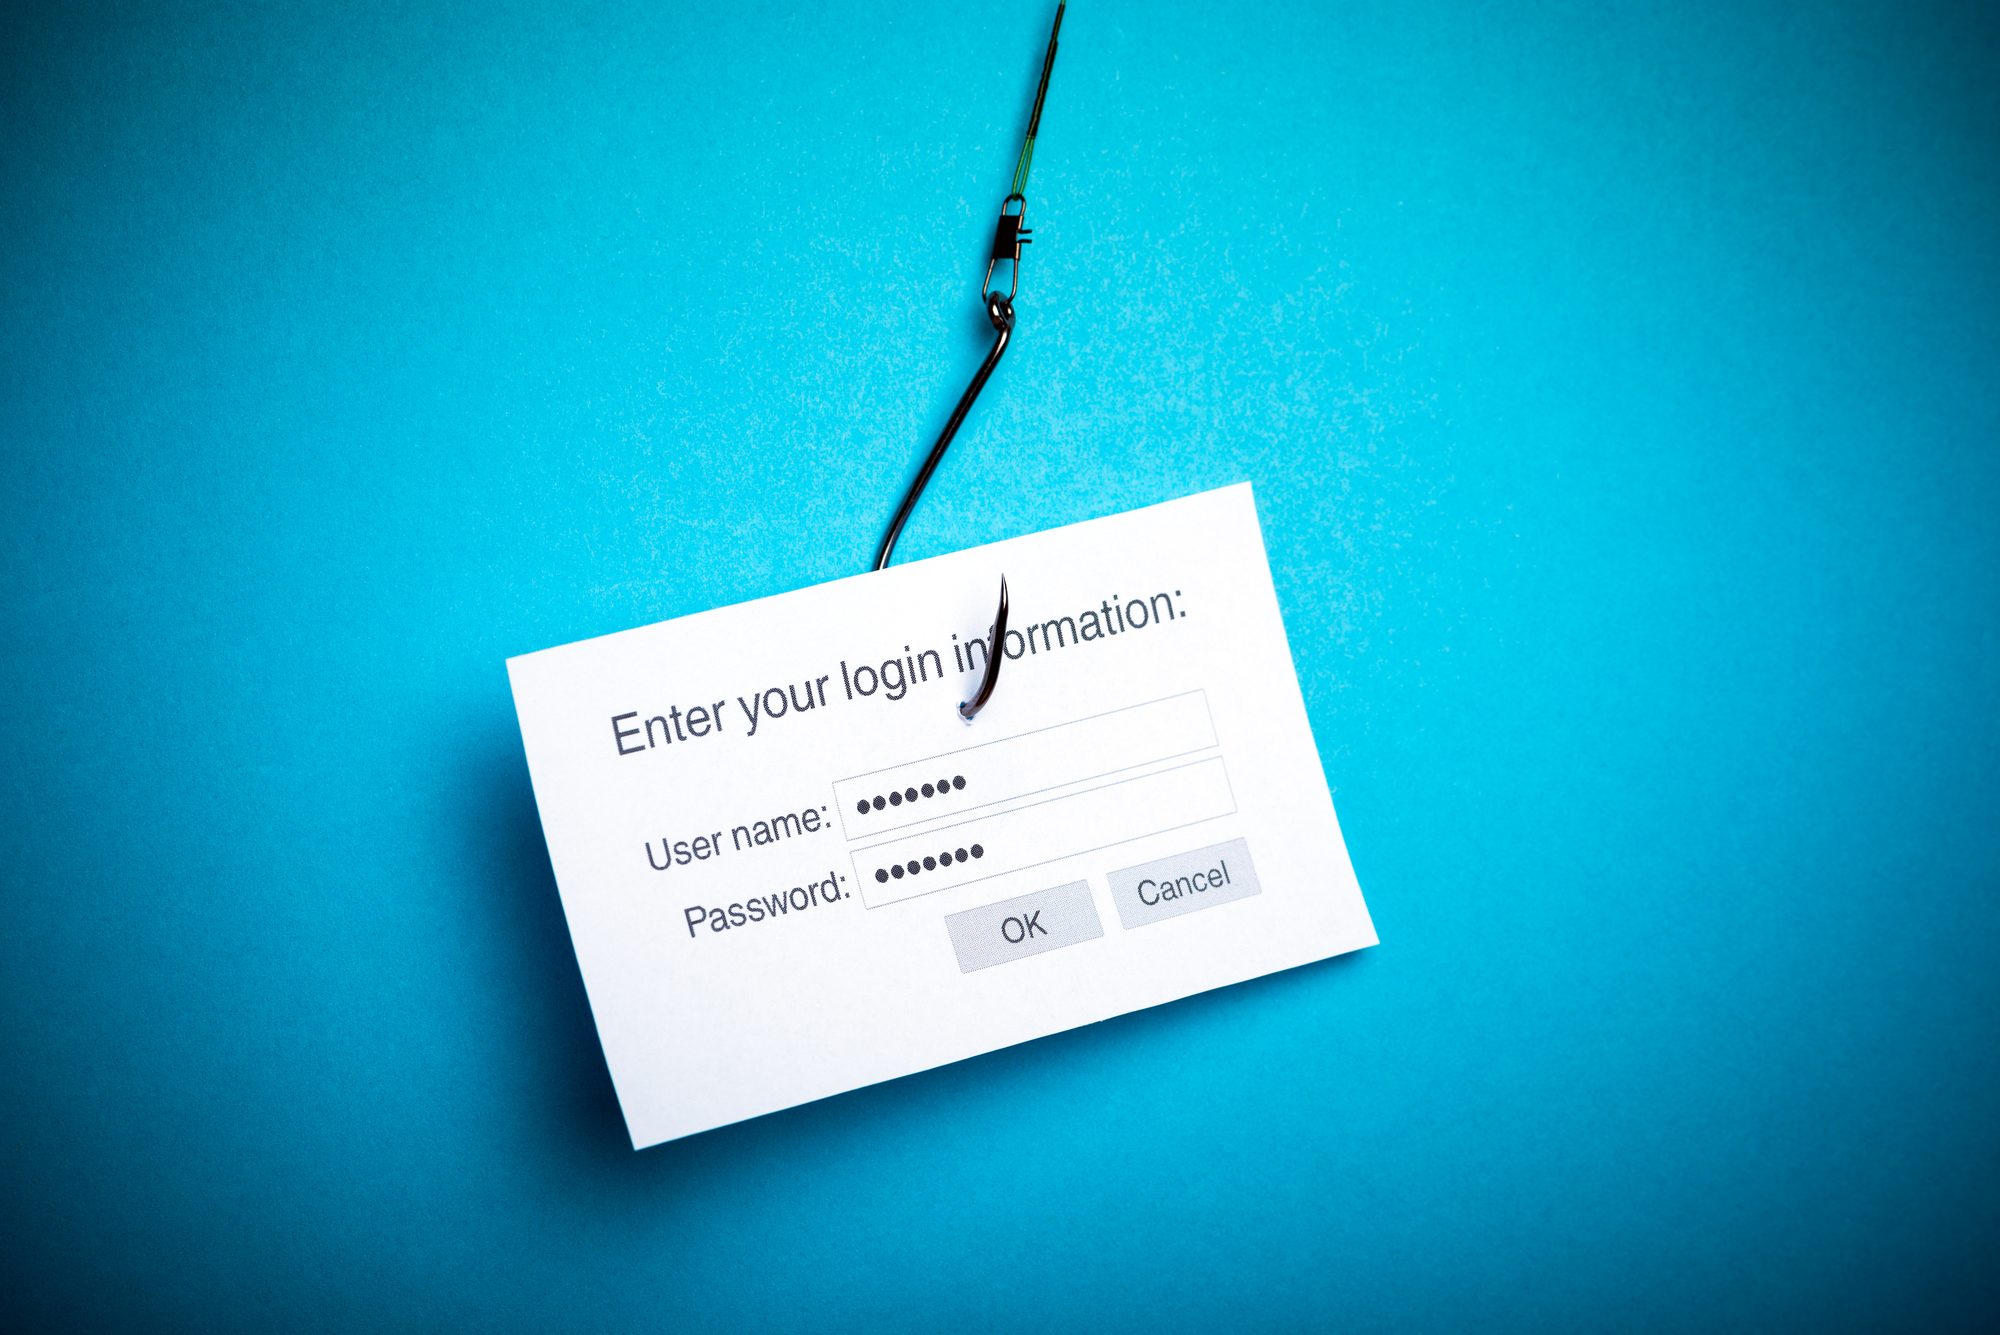 Malware phishing attacks stealing username and password